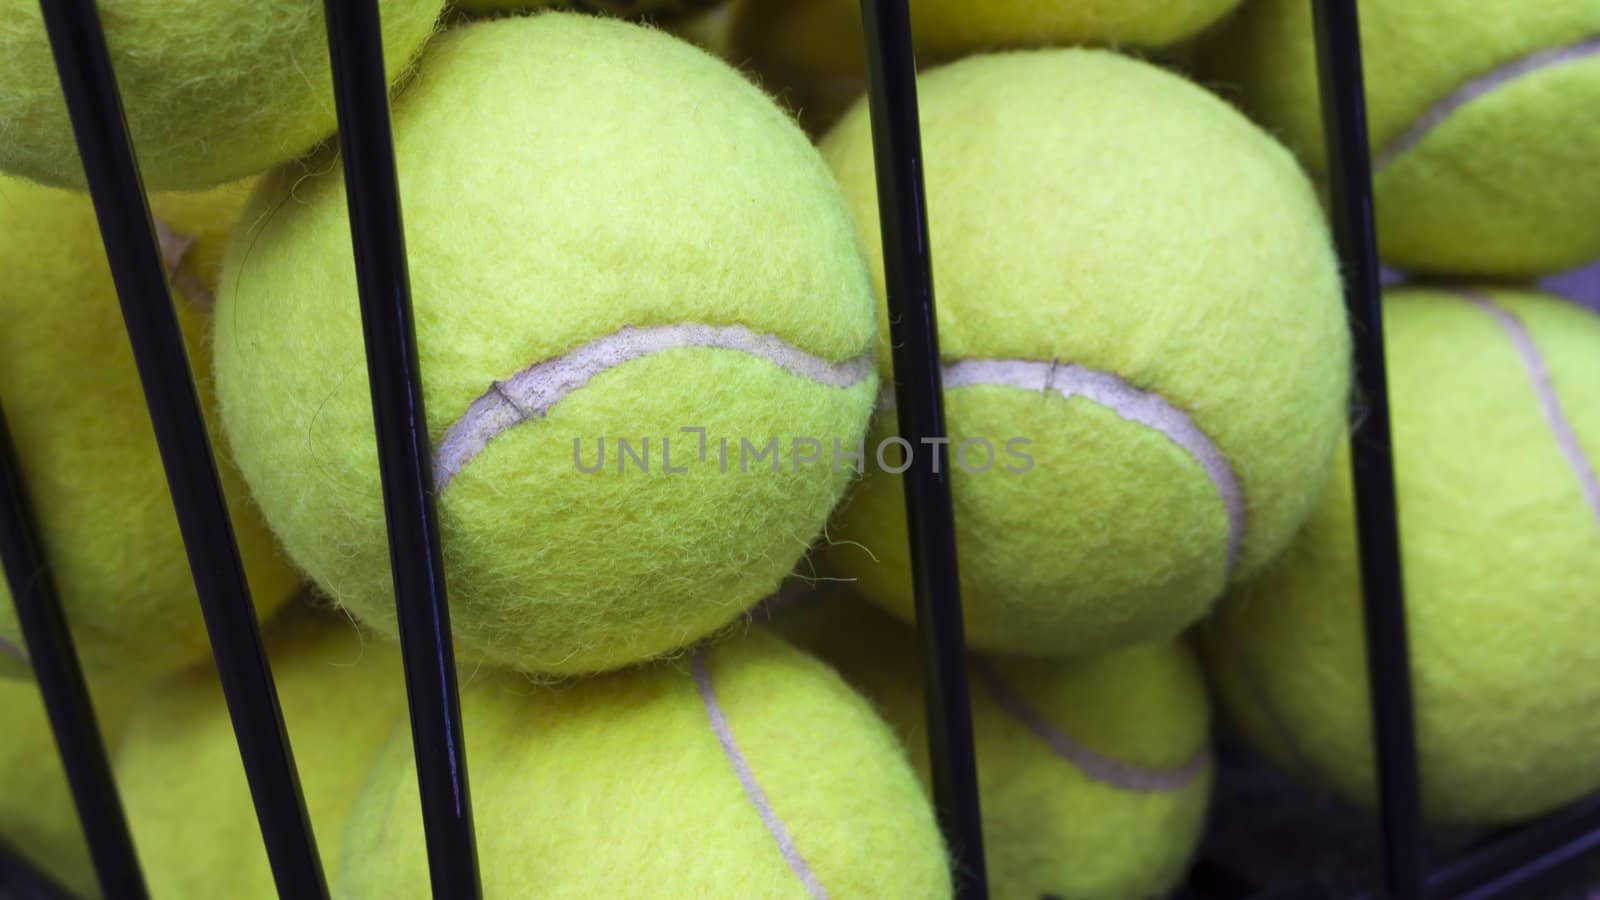 Some tennis balls stored in steel baskets